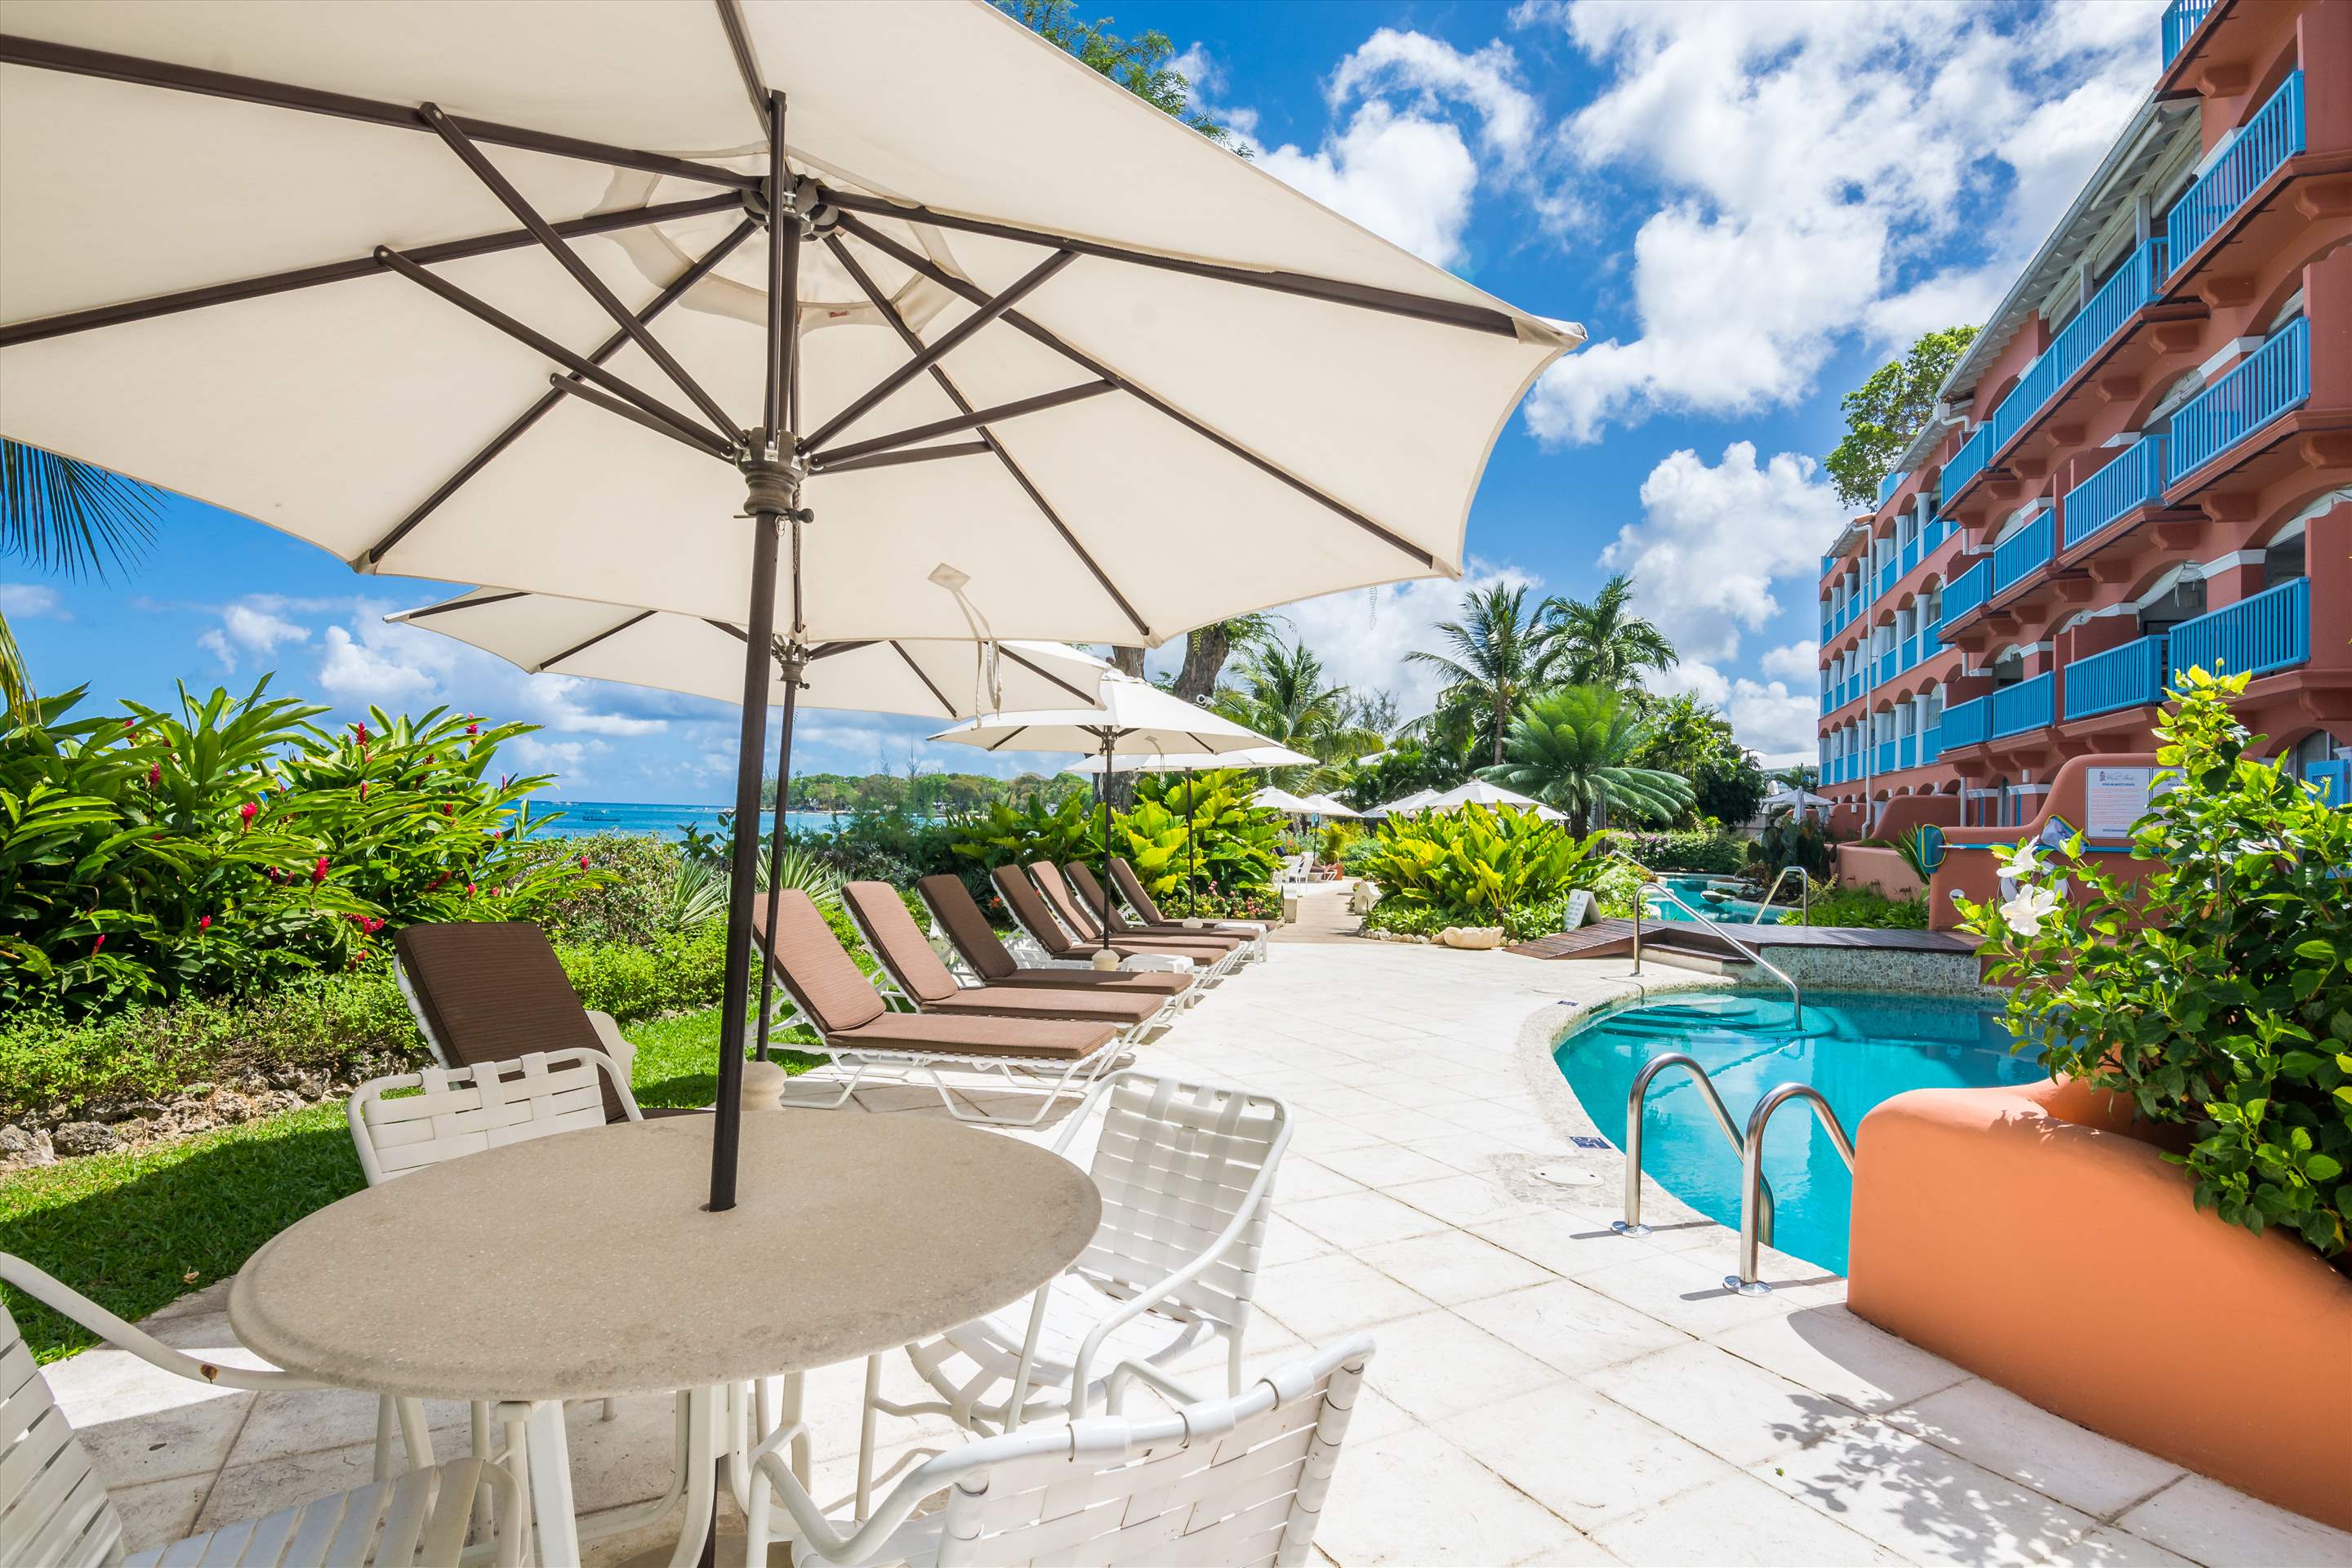 Villas on the Beach 201 , 3 bedroom, 3 bedroom apartment in St. James & West Coast, Barbados Photo #6